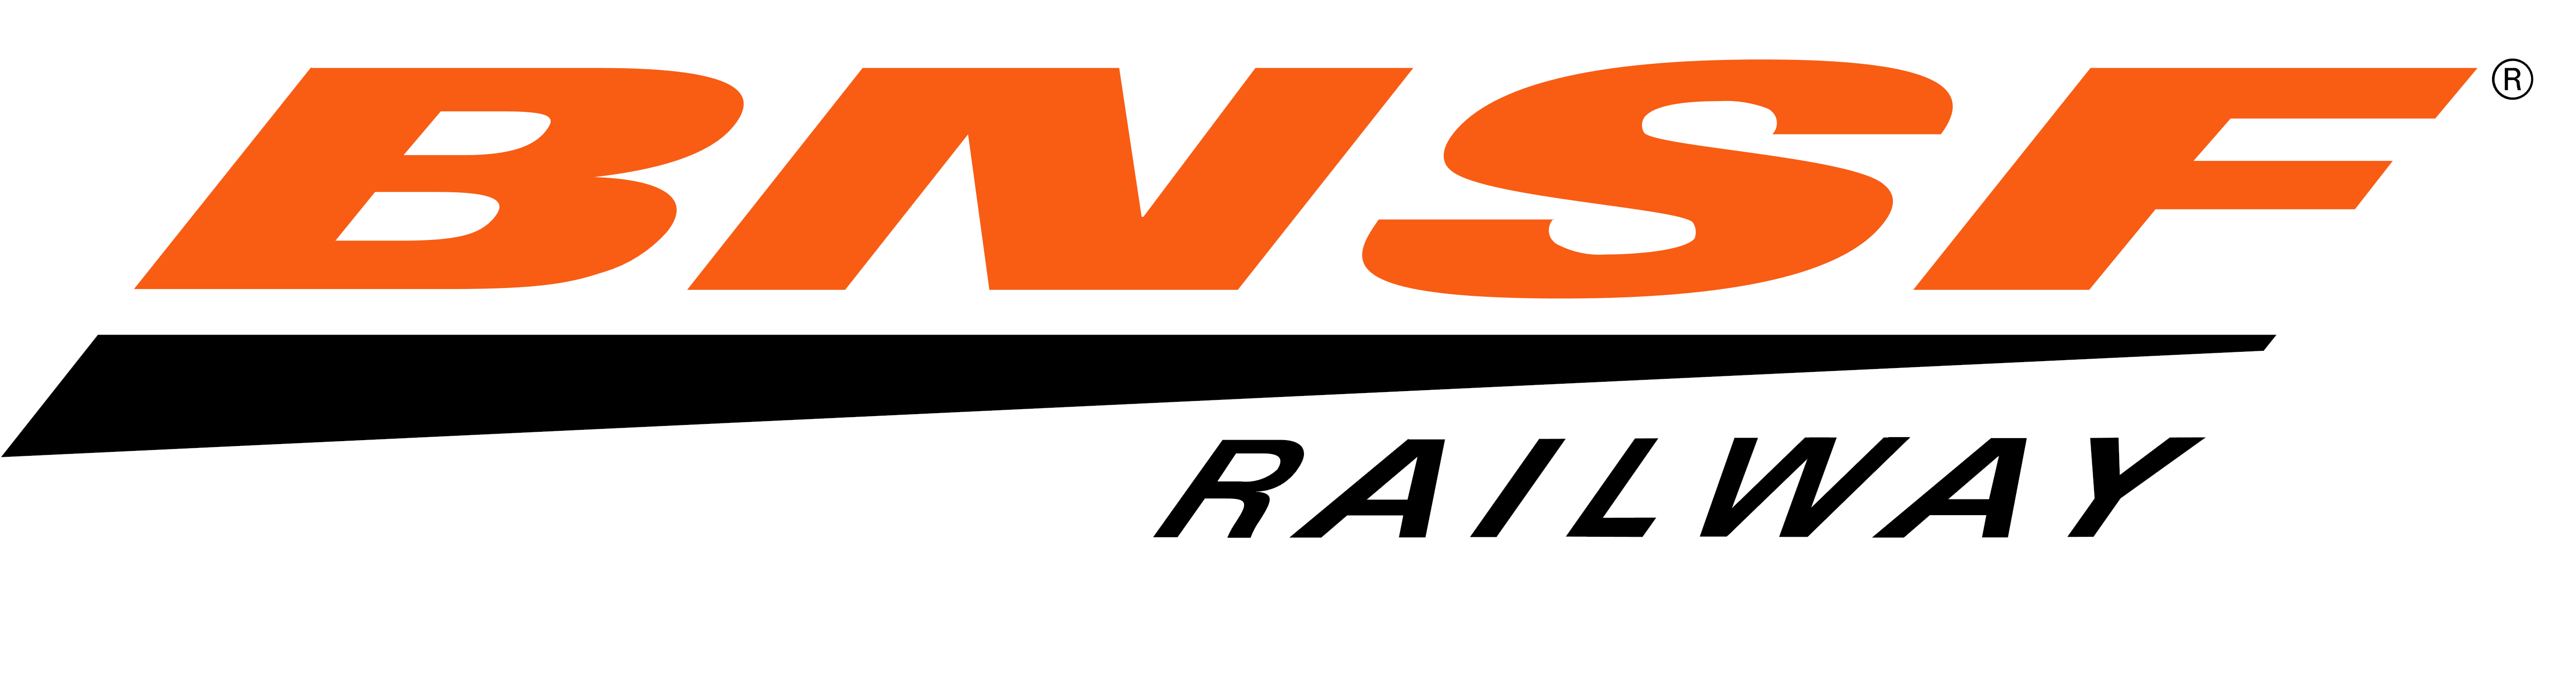 BNSF Brand Logo